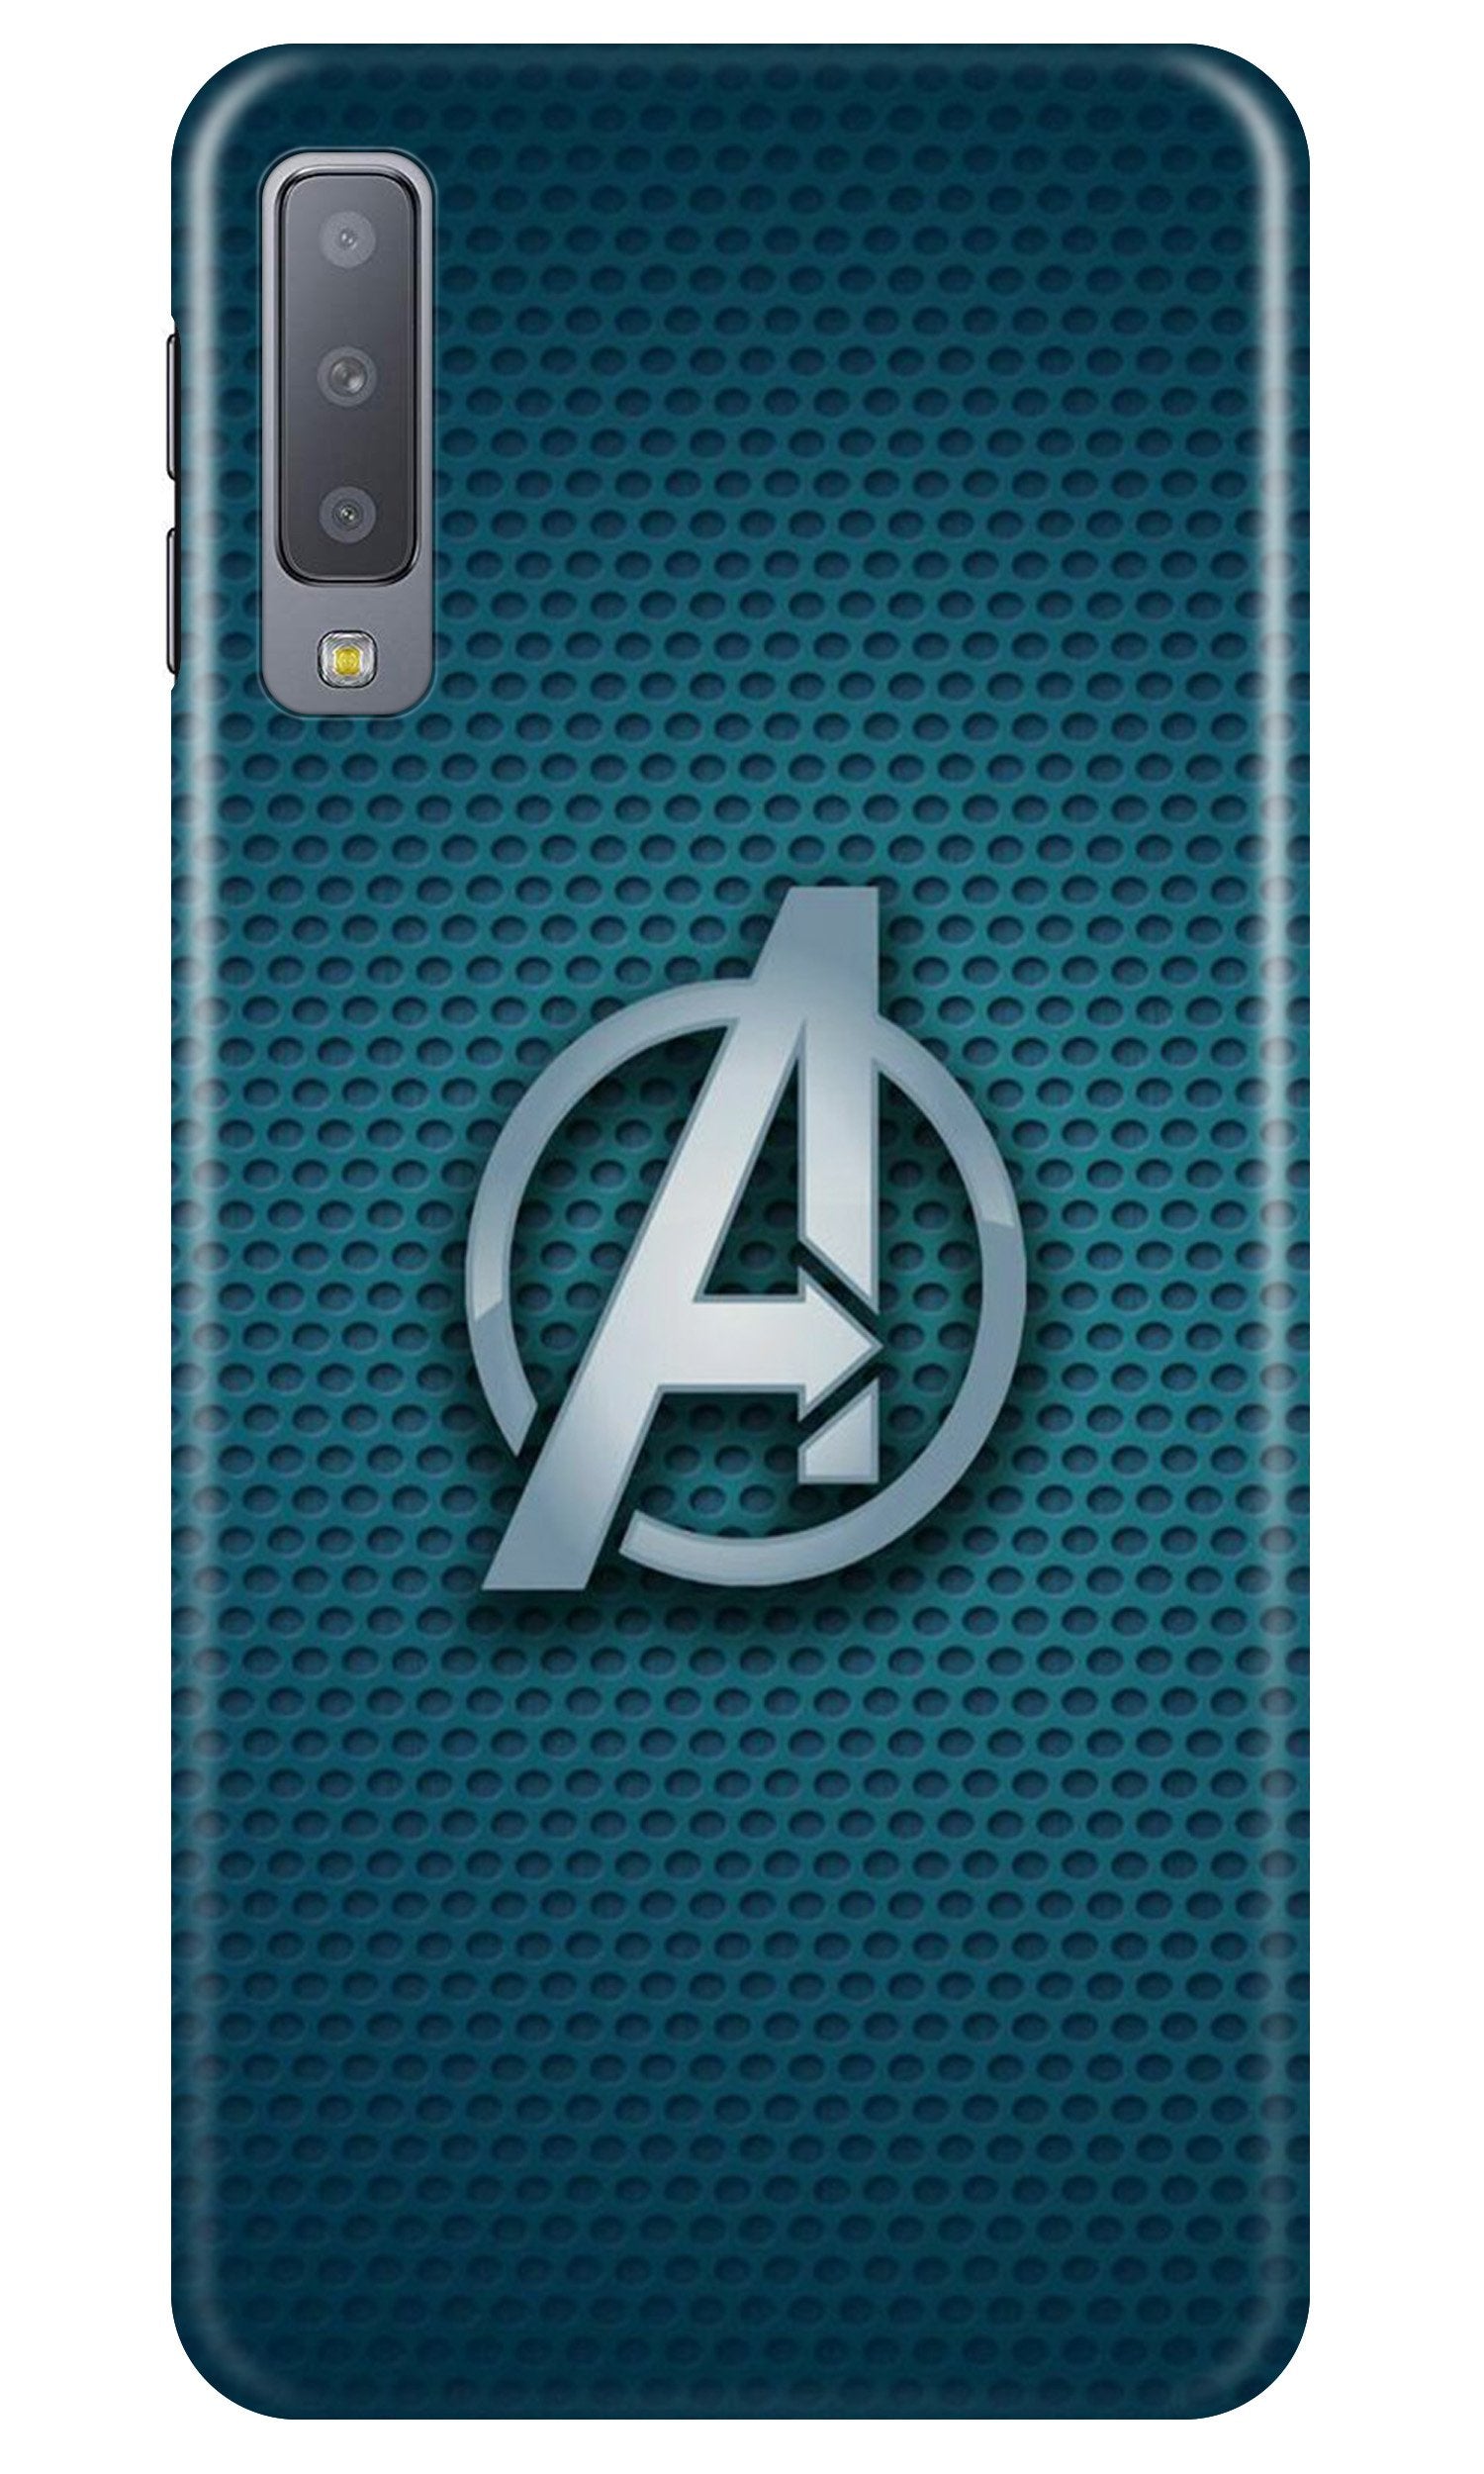 Avengers Case for Samsung Galaxy A70 (Design No. 246)